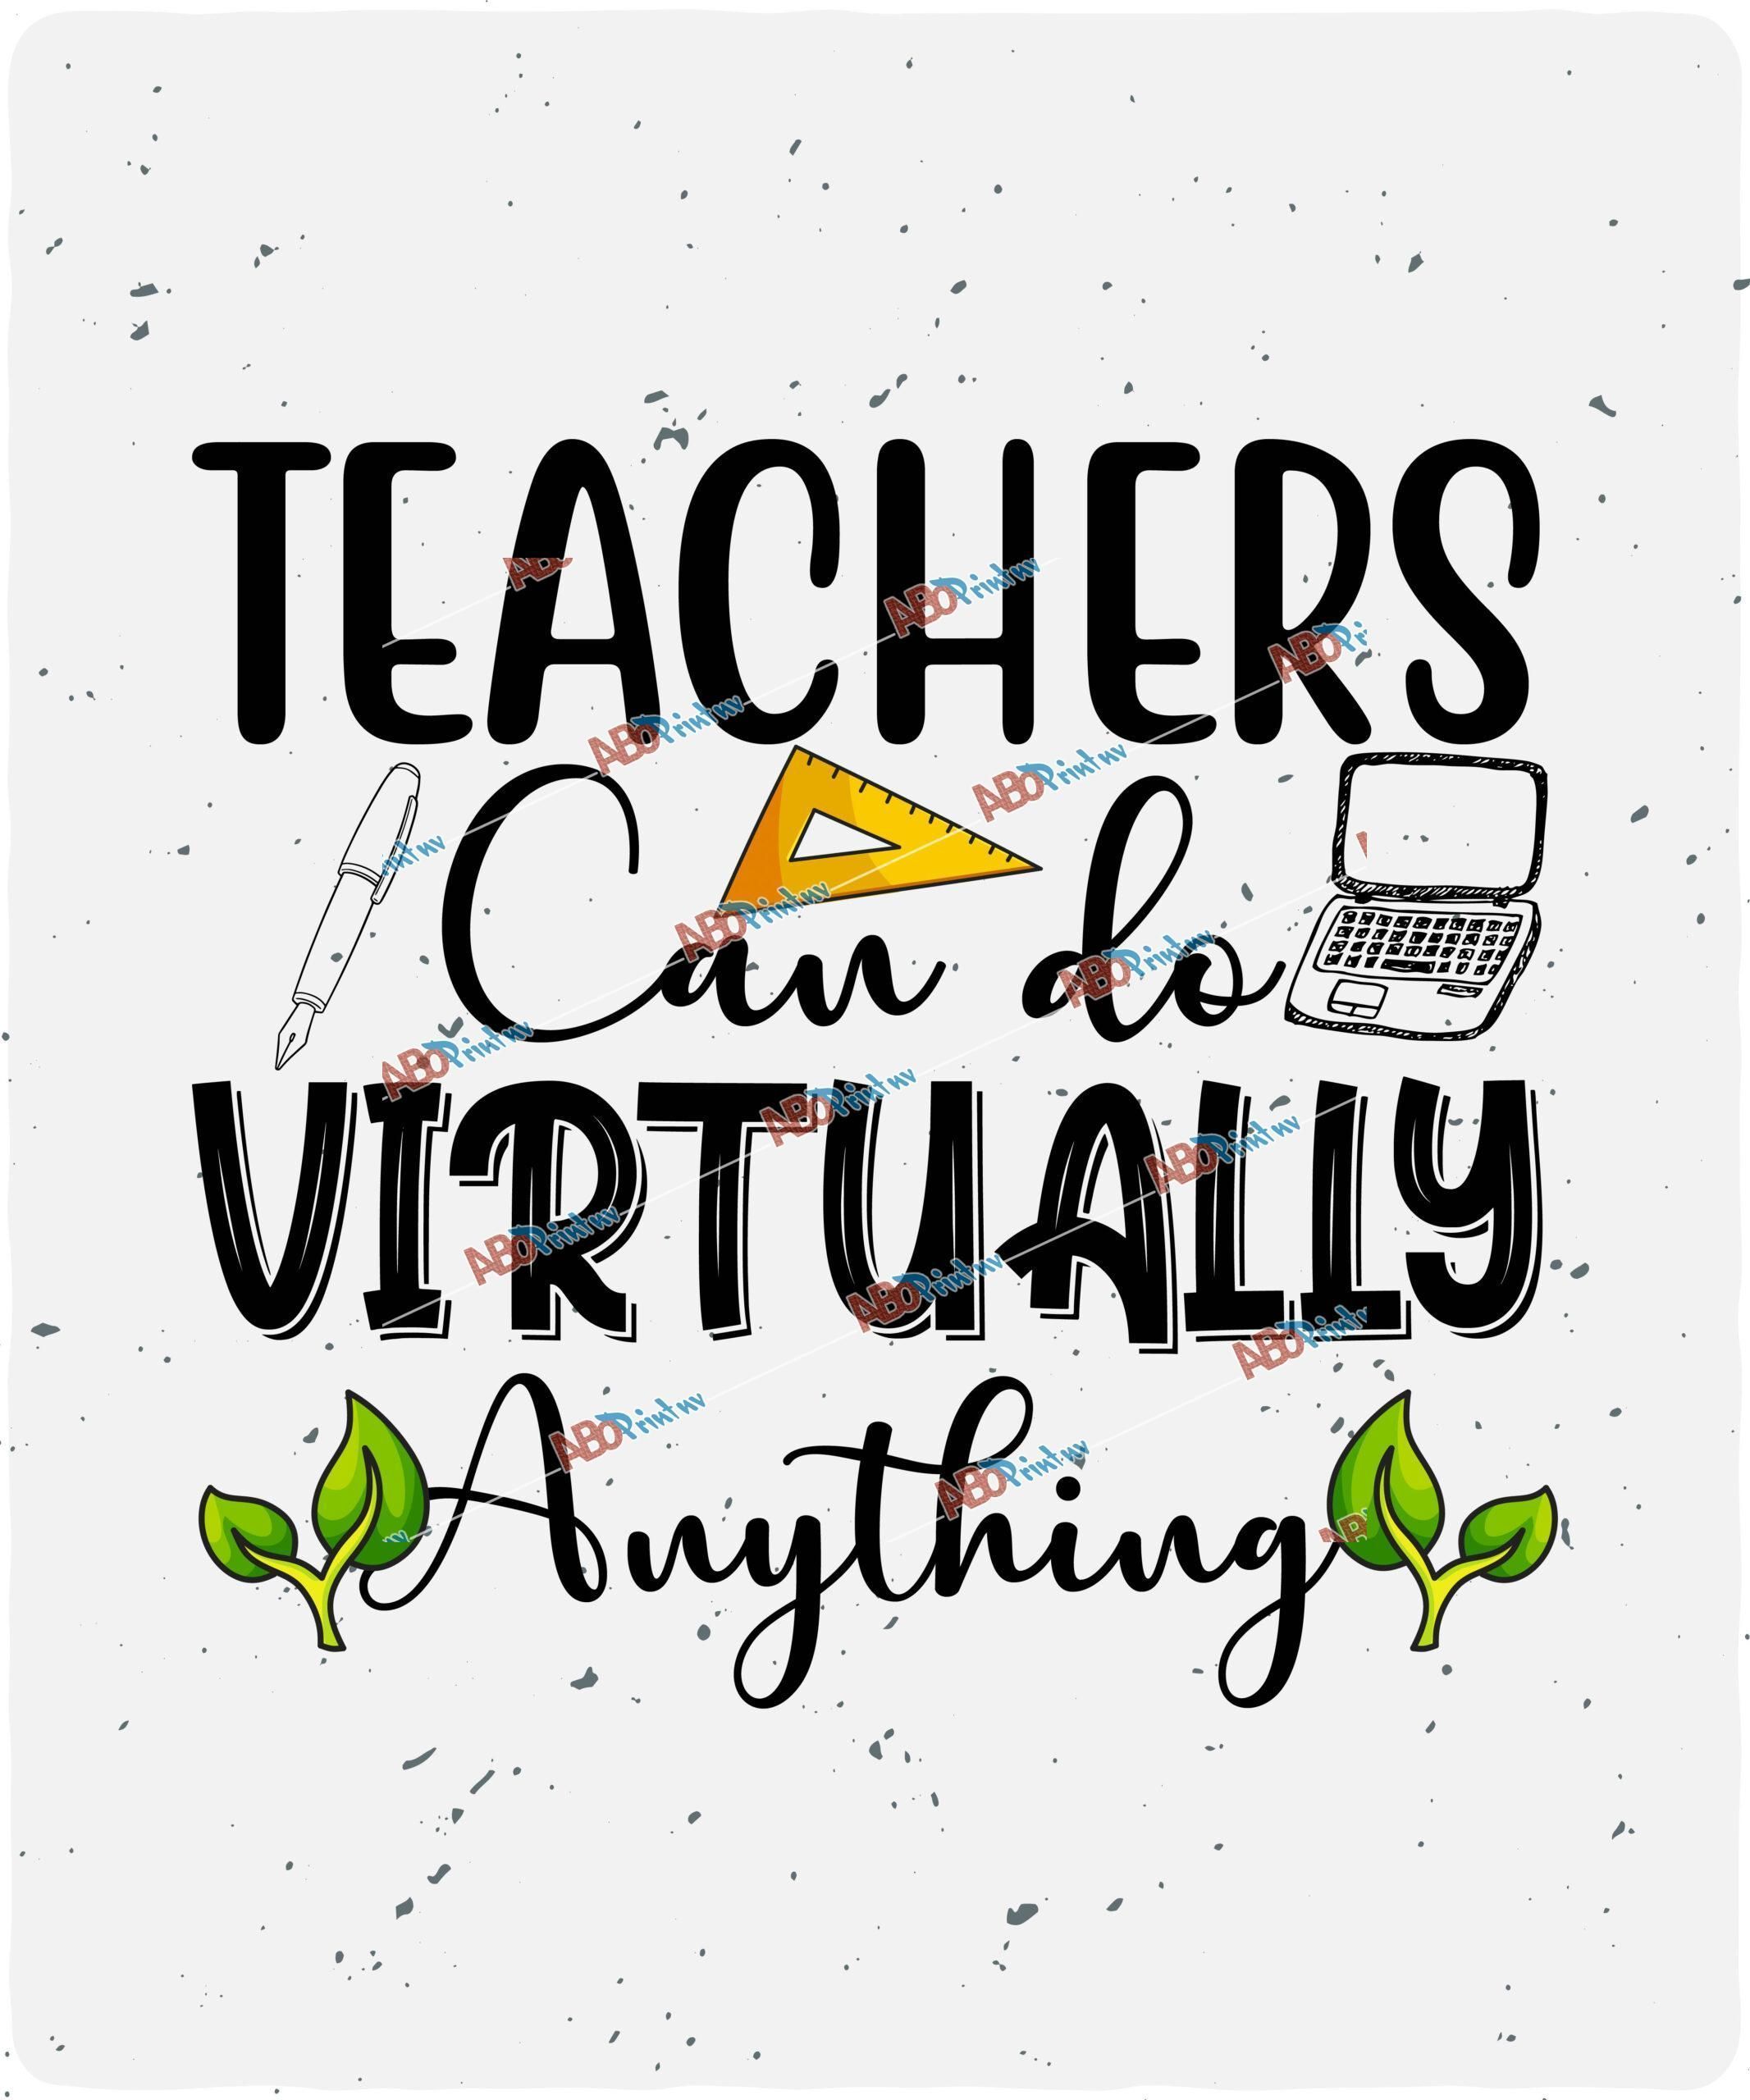 Teachers can do virtually anything